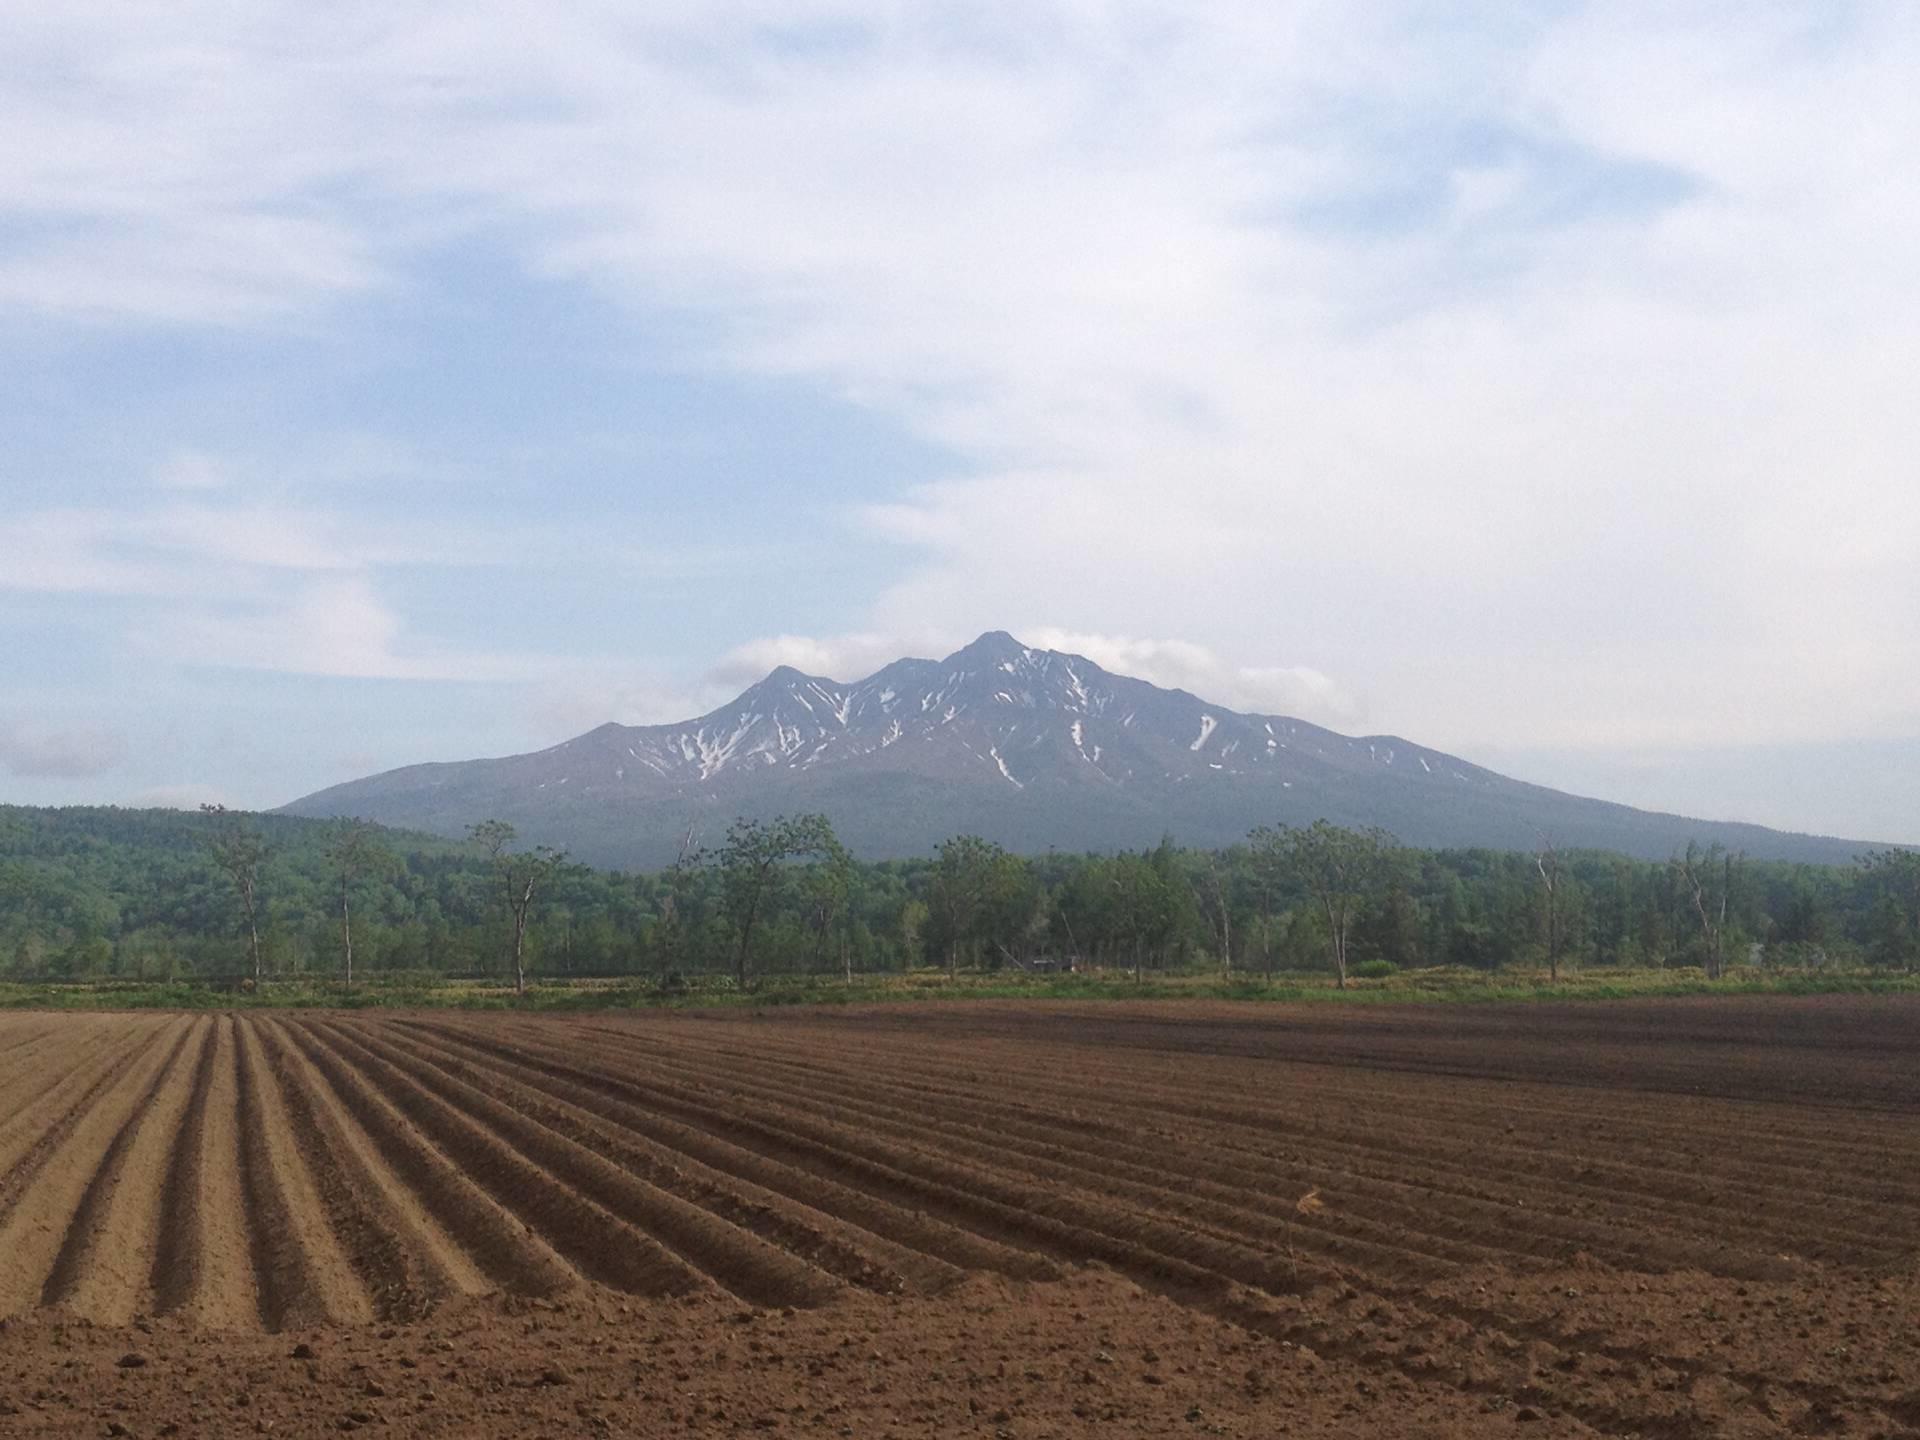 Another recovered one: Shari-dake, the Fuji of northeast Hokkaido